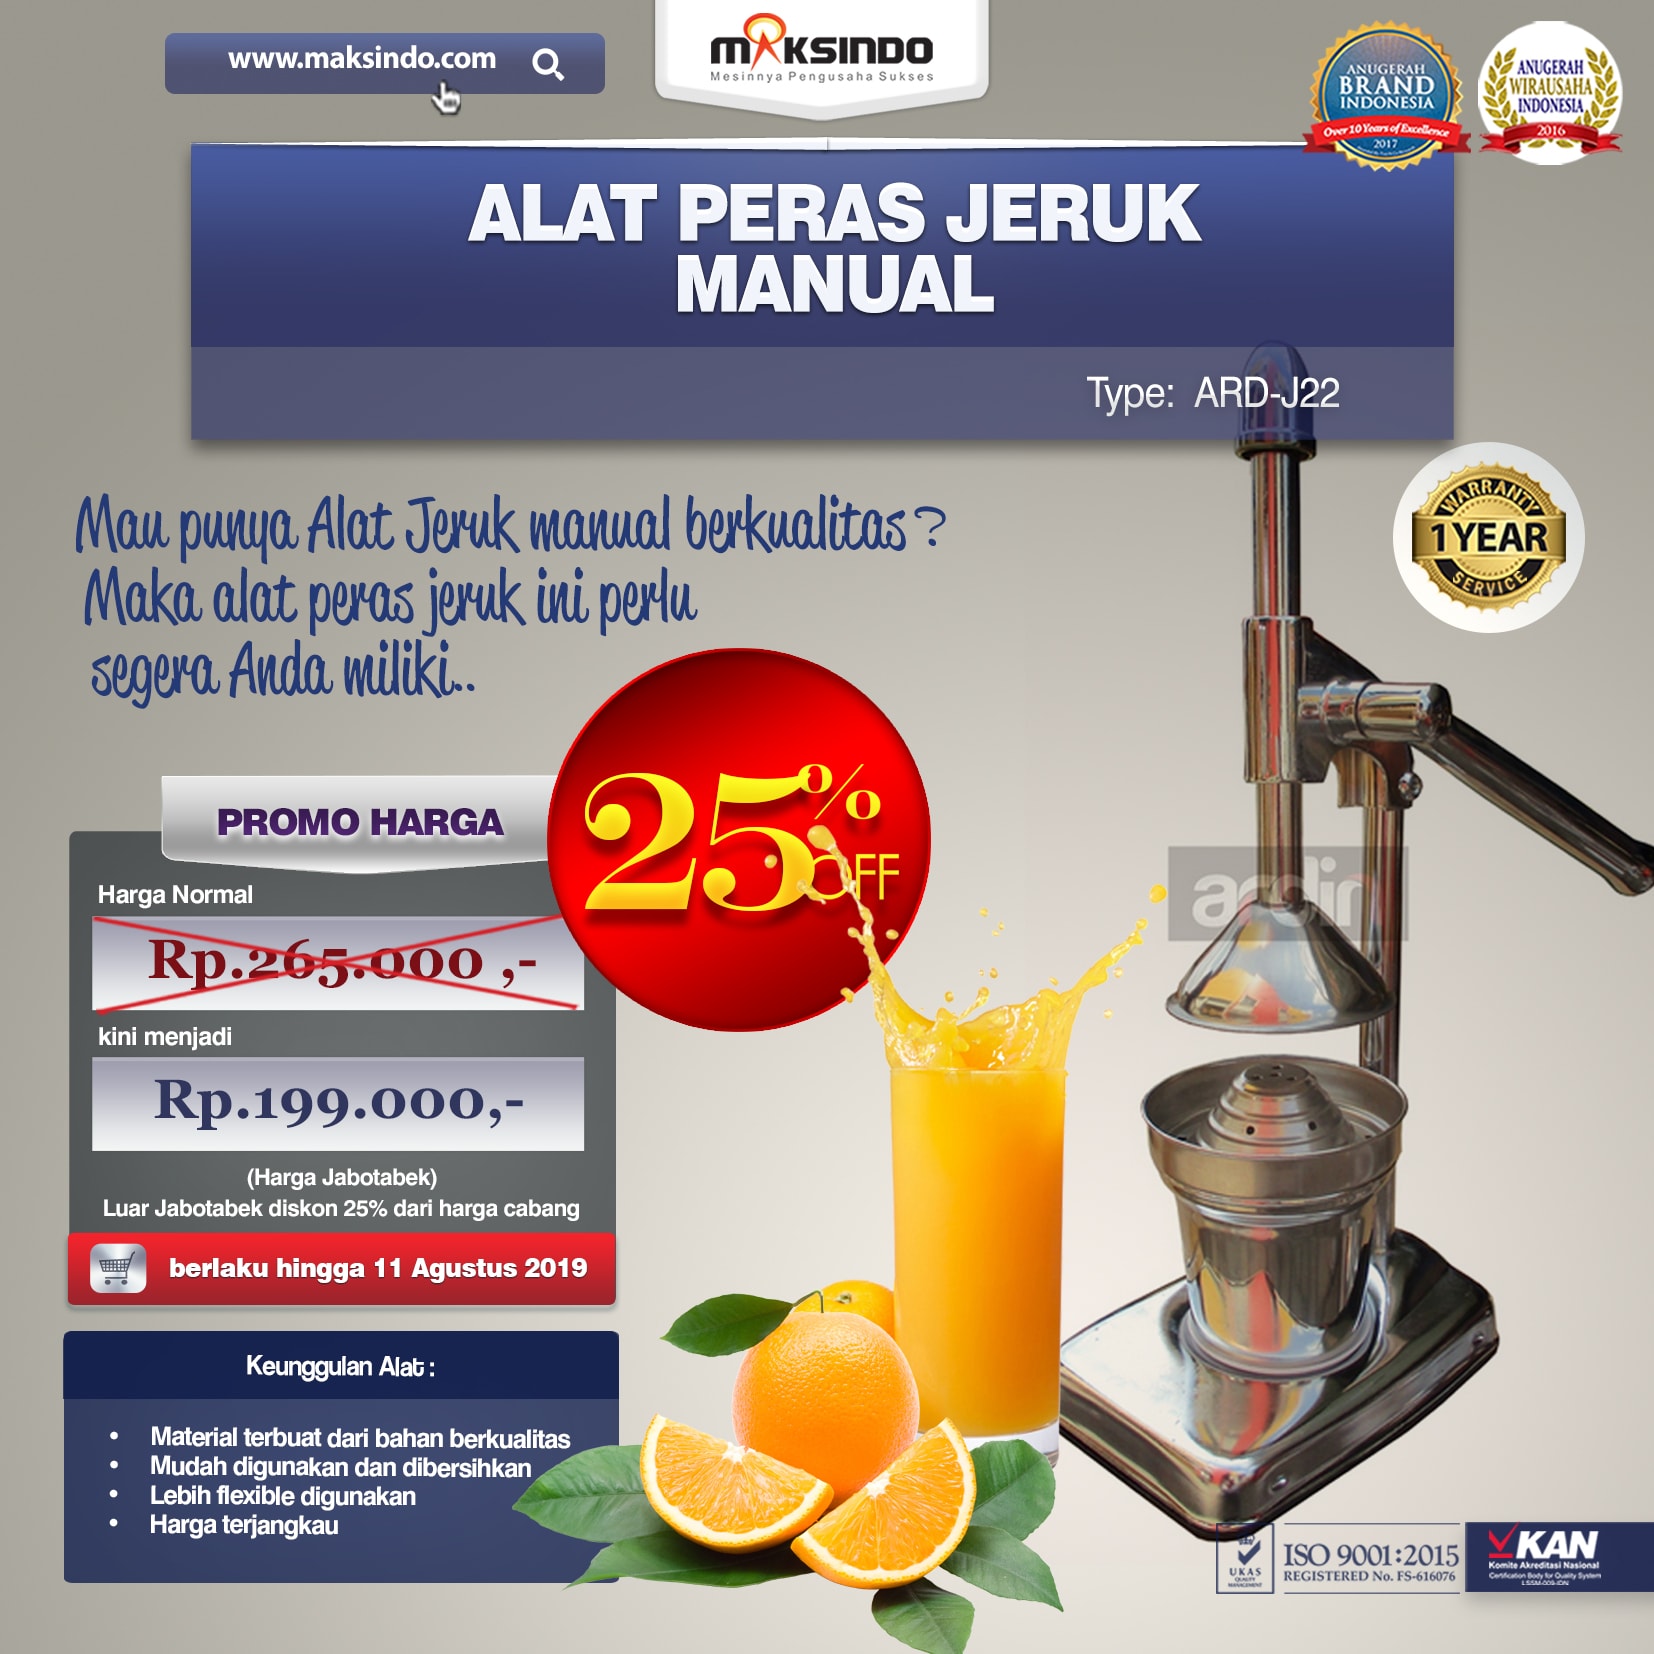 Alat Pemeras Jeruk Manual ARD-J22